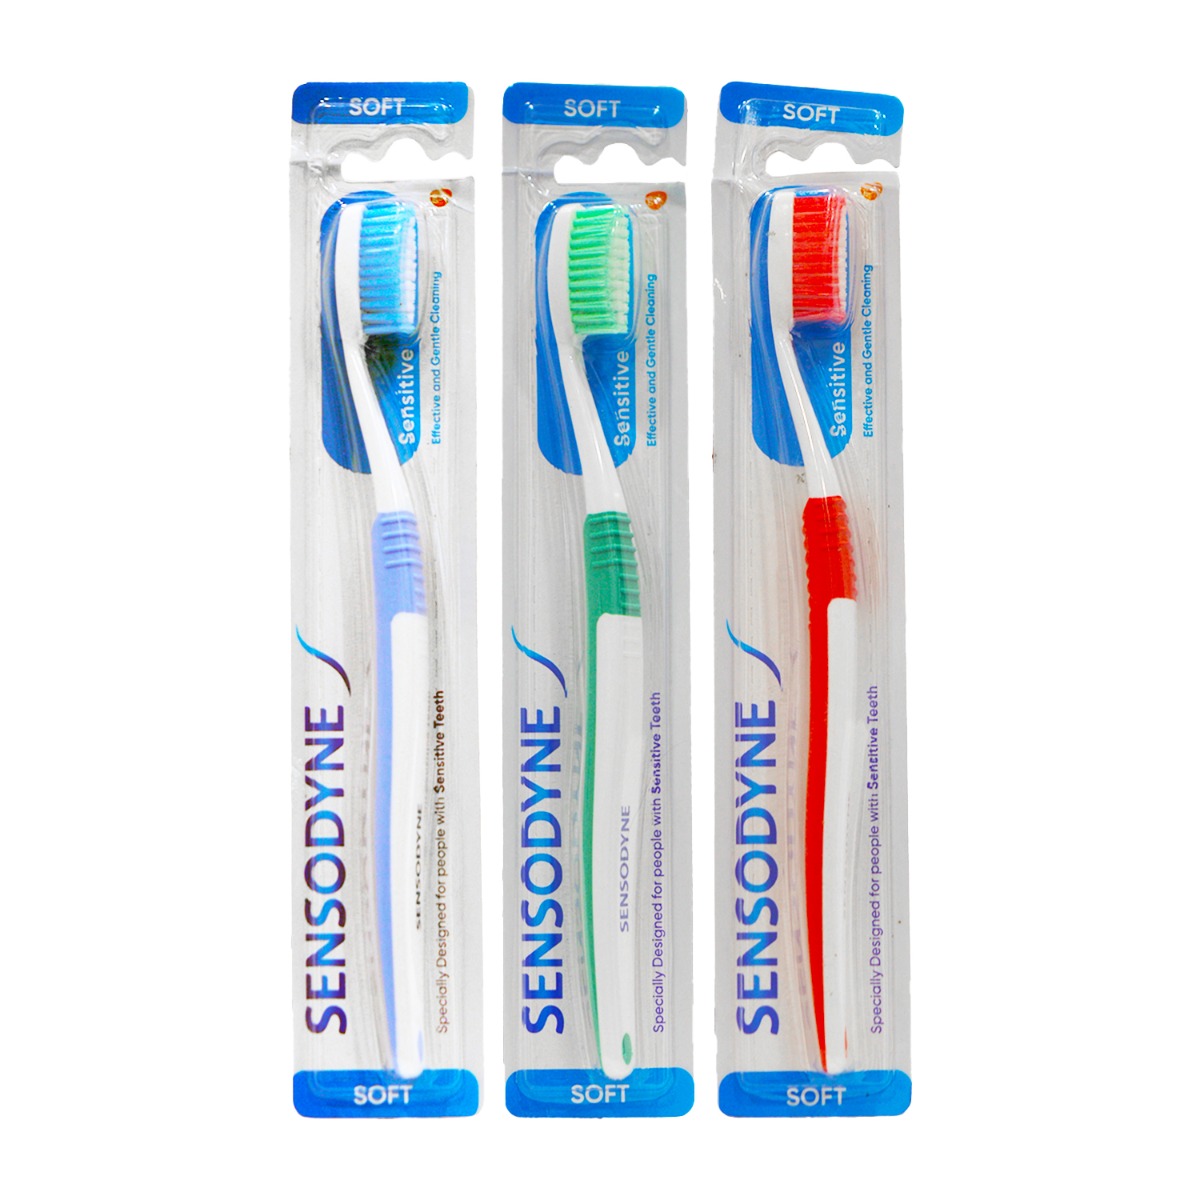 Sensodyne Sensitive Toothbrush - Soft (Pack of 3), Assorted(Red, Blue, Green)